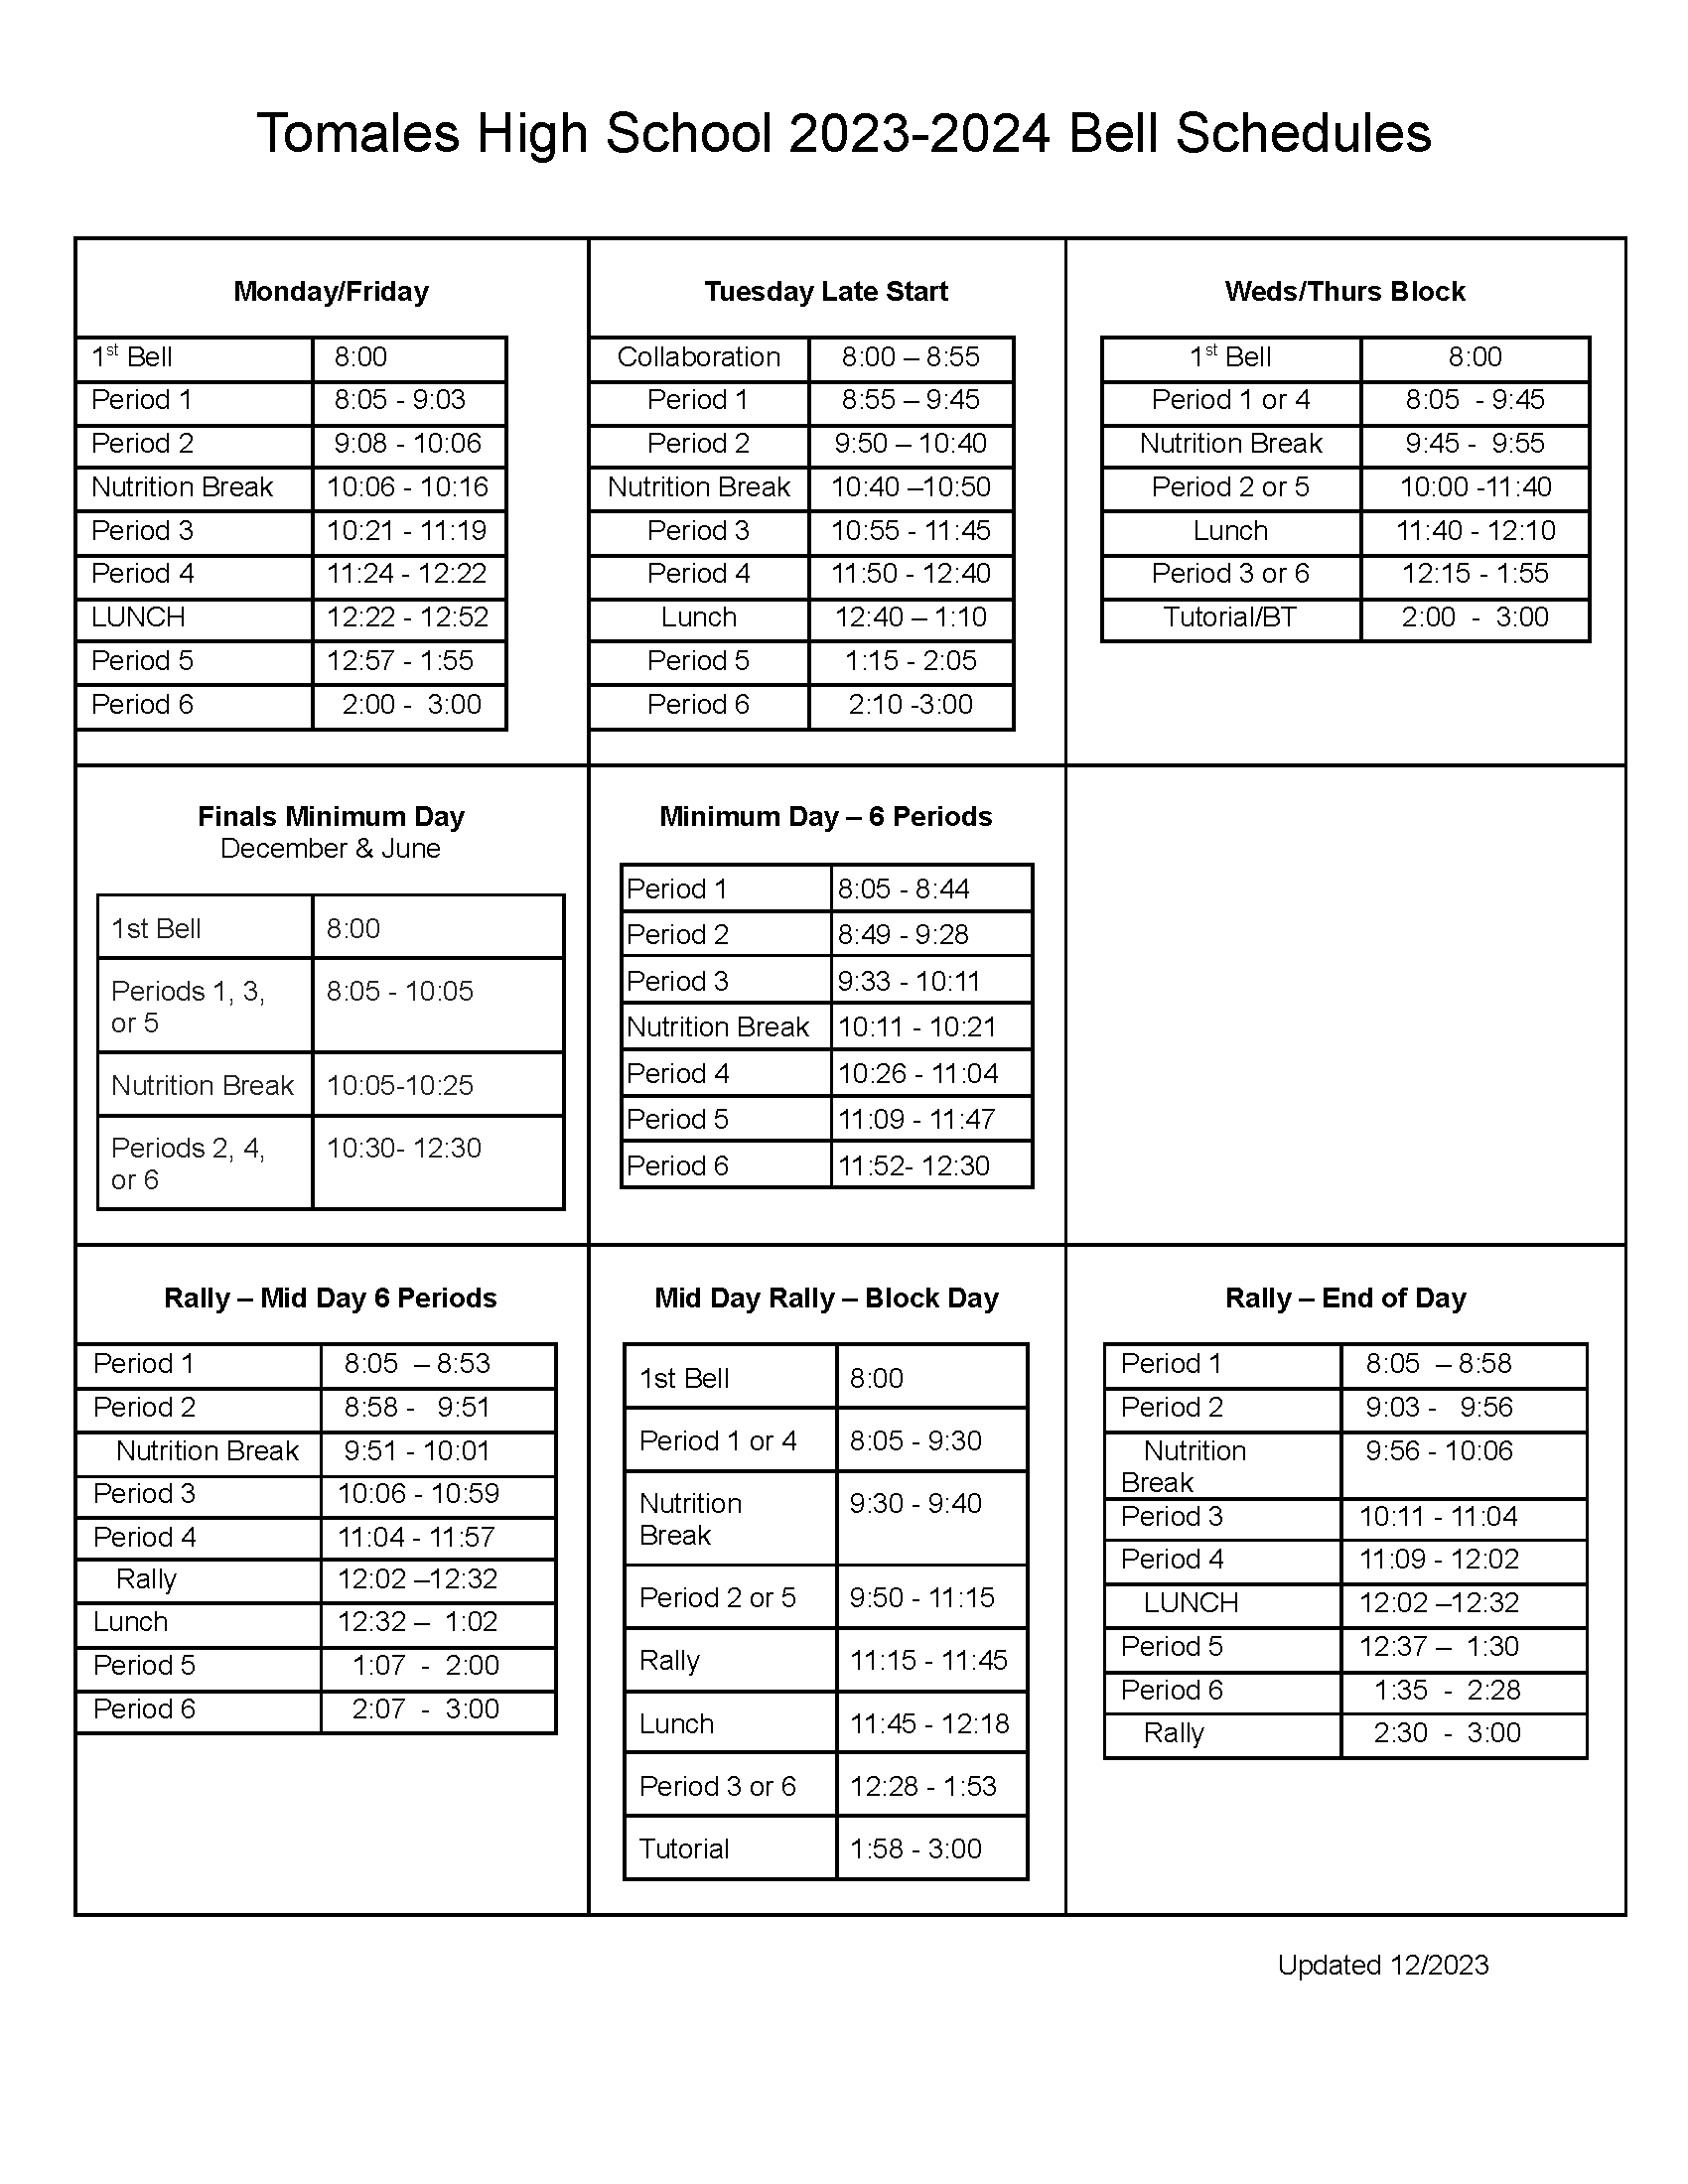 Updated 23-24 bell schedule